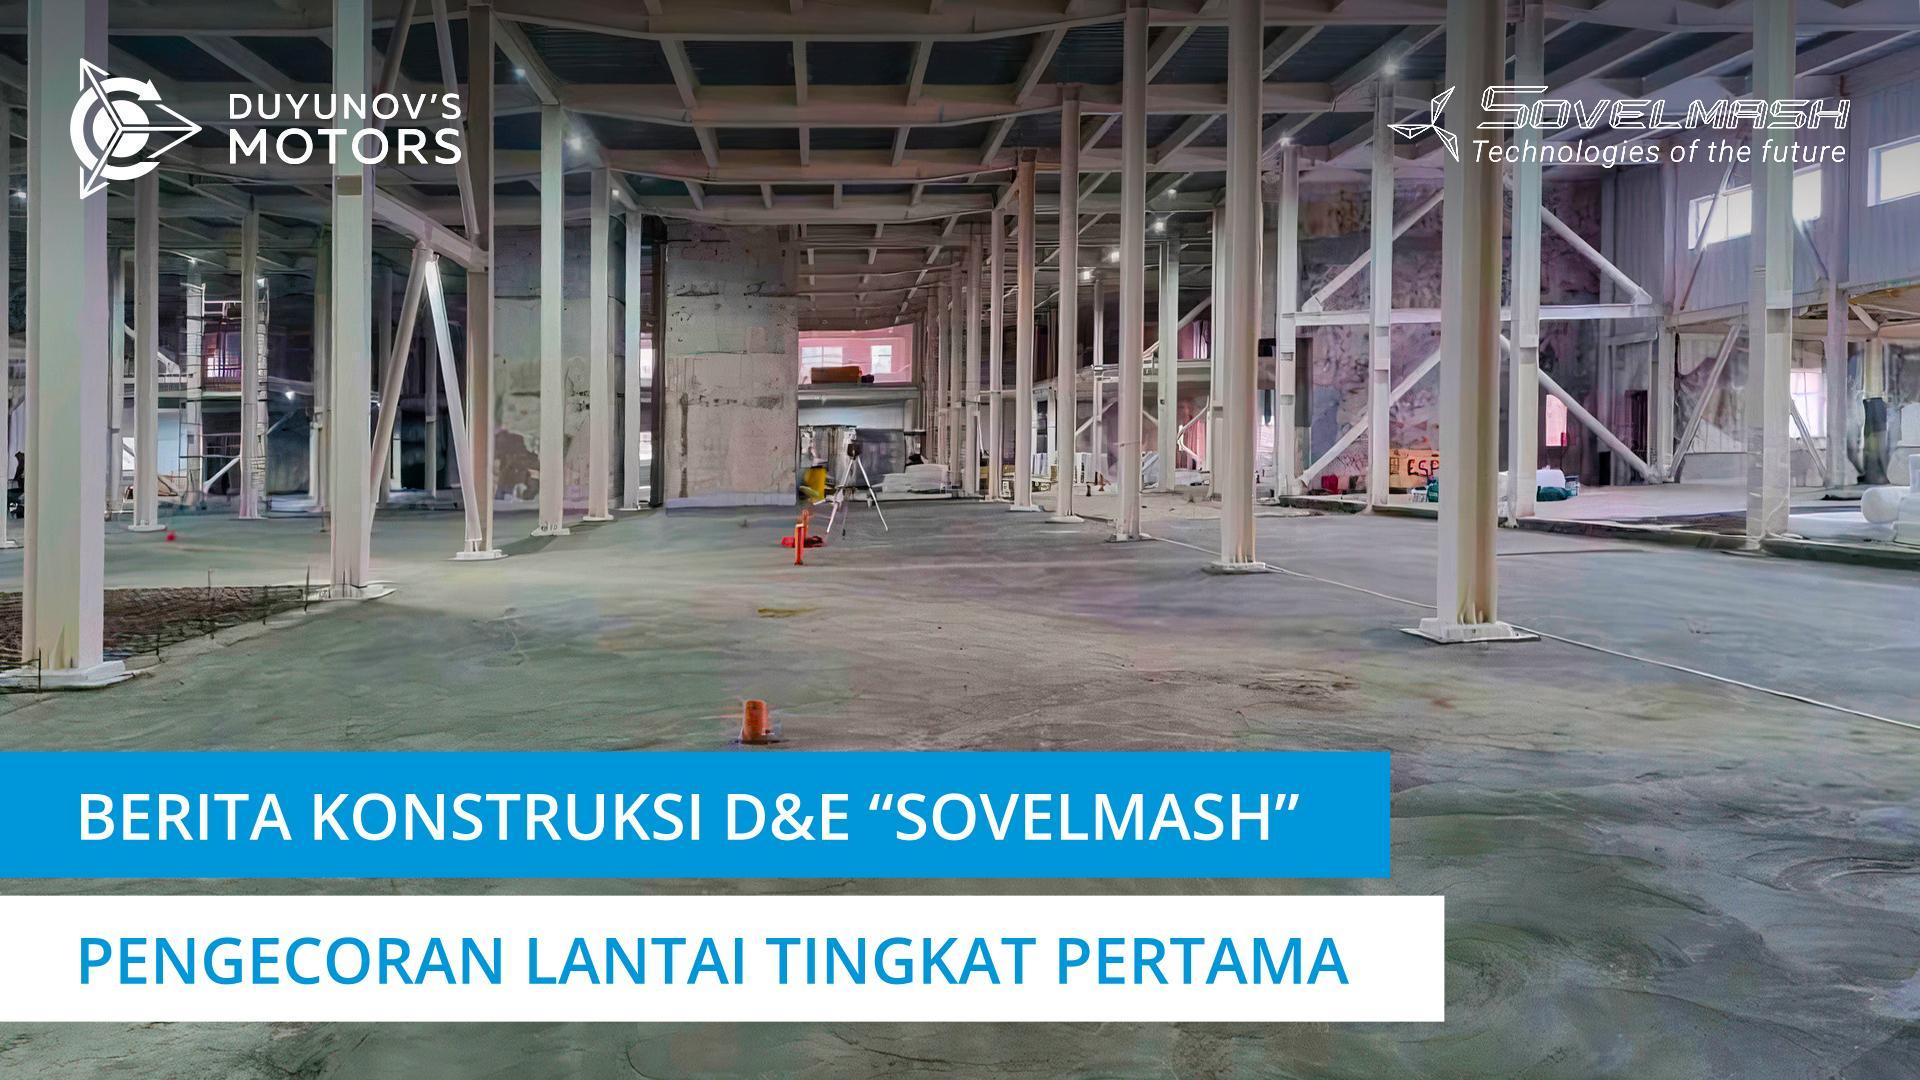 Bagaimana progres pengecoran lantai tingkat pertama di gedung D&E "Sovelmash"?